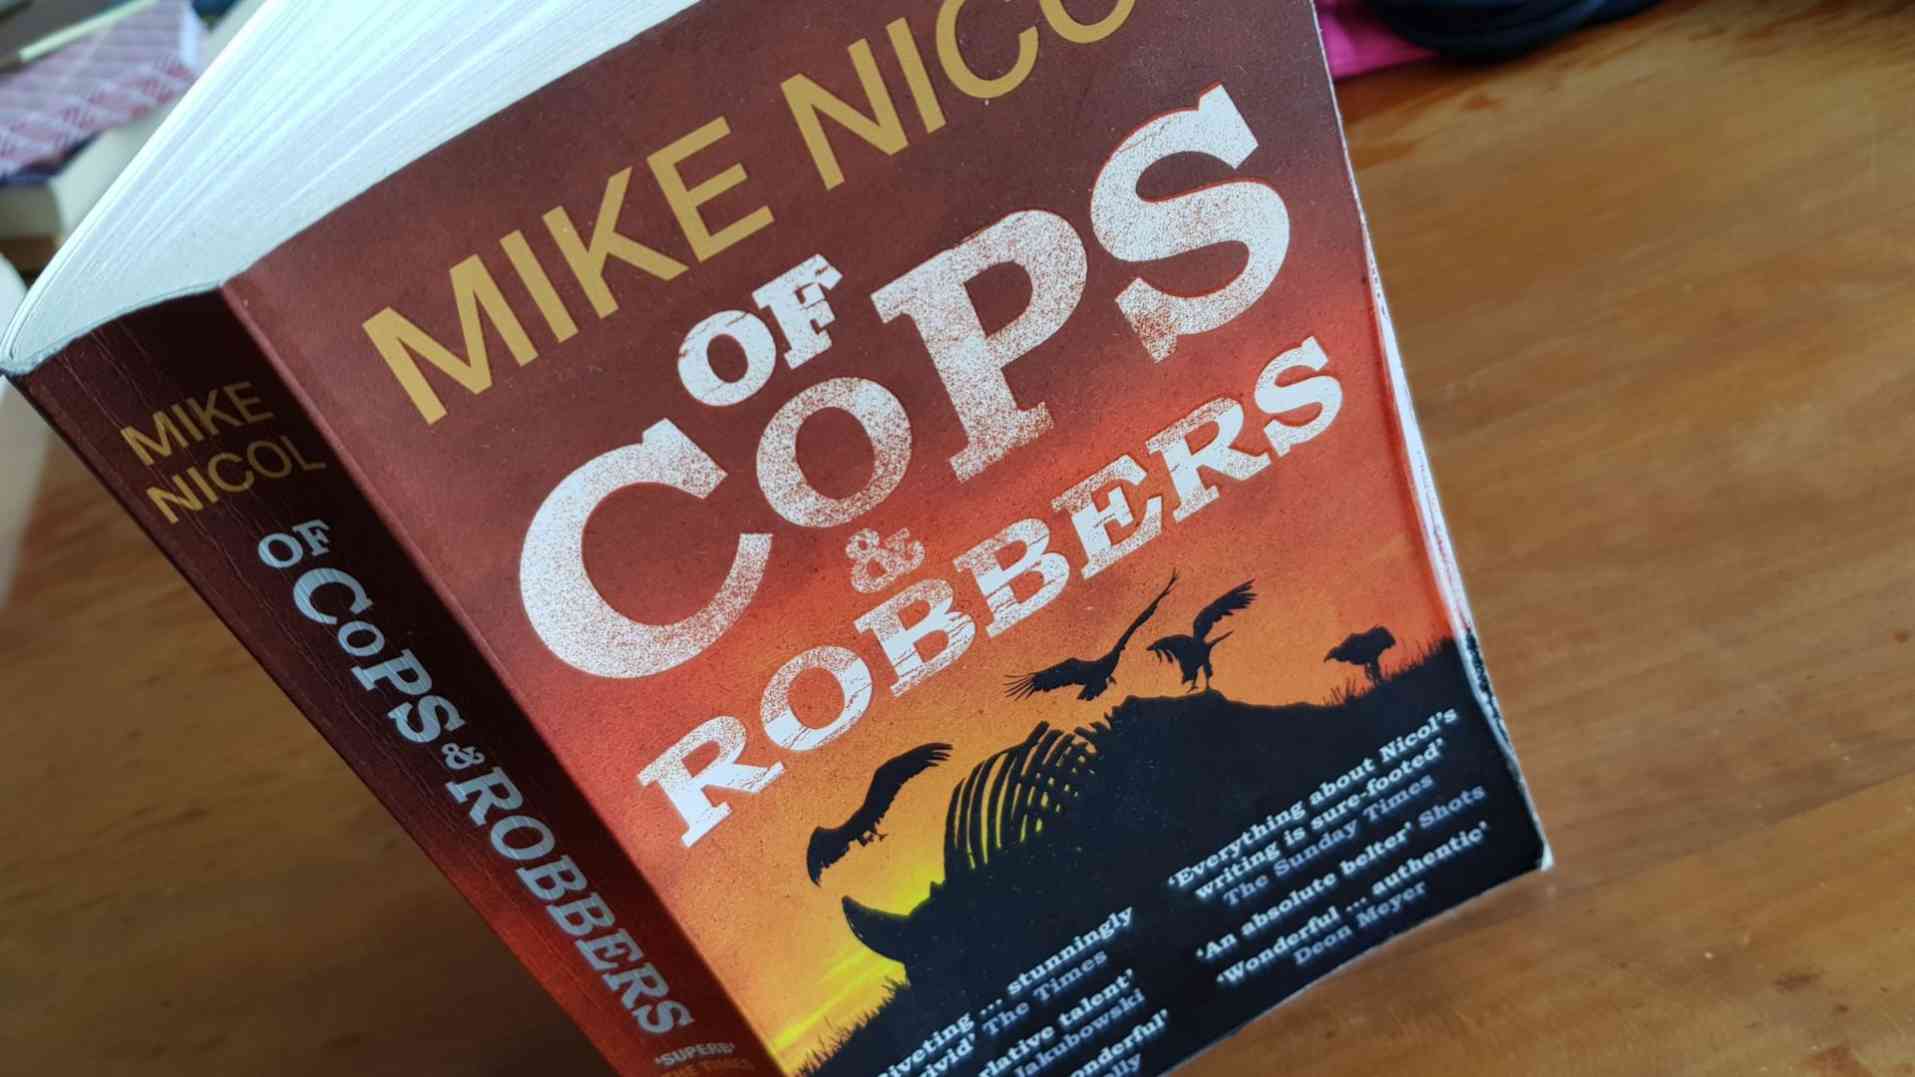 Of Cops and Robbers, av Mike Nicol